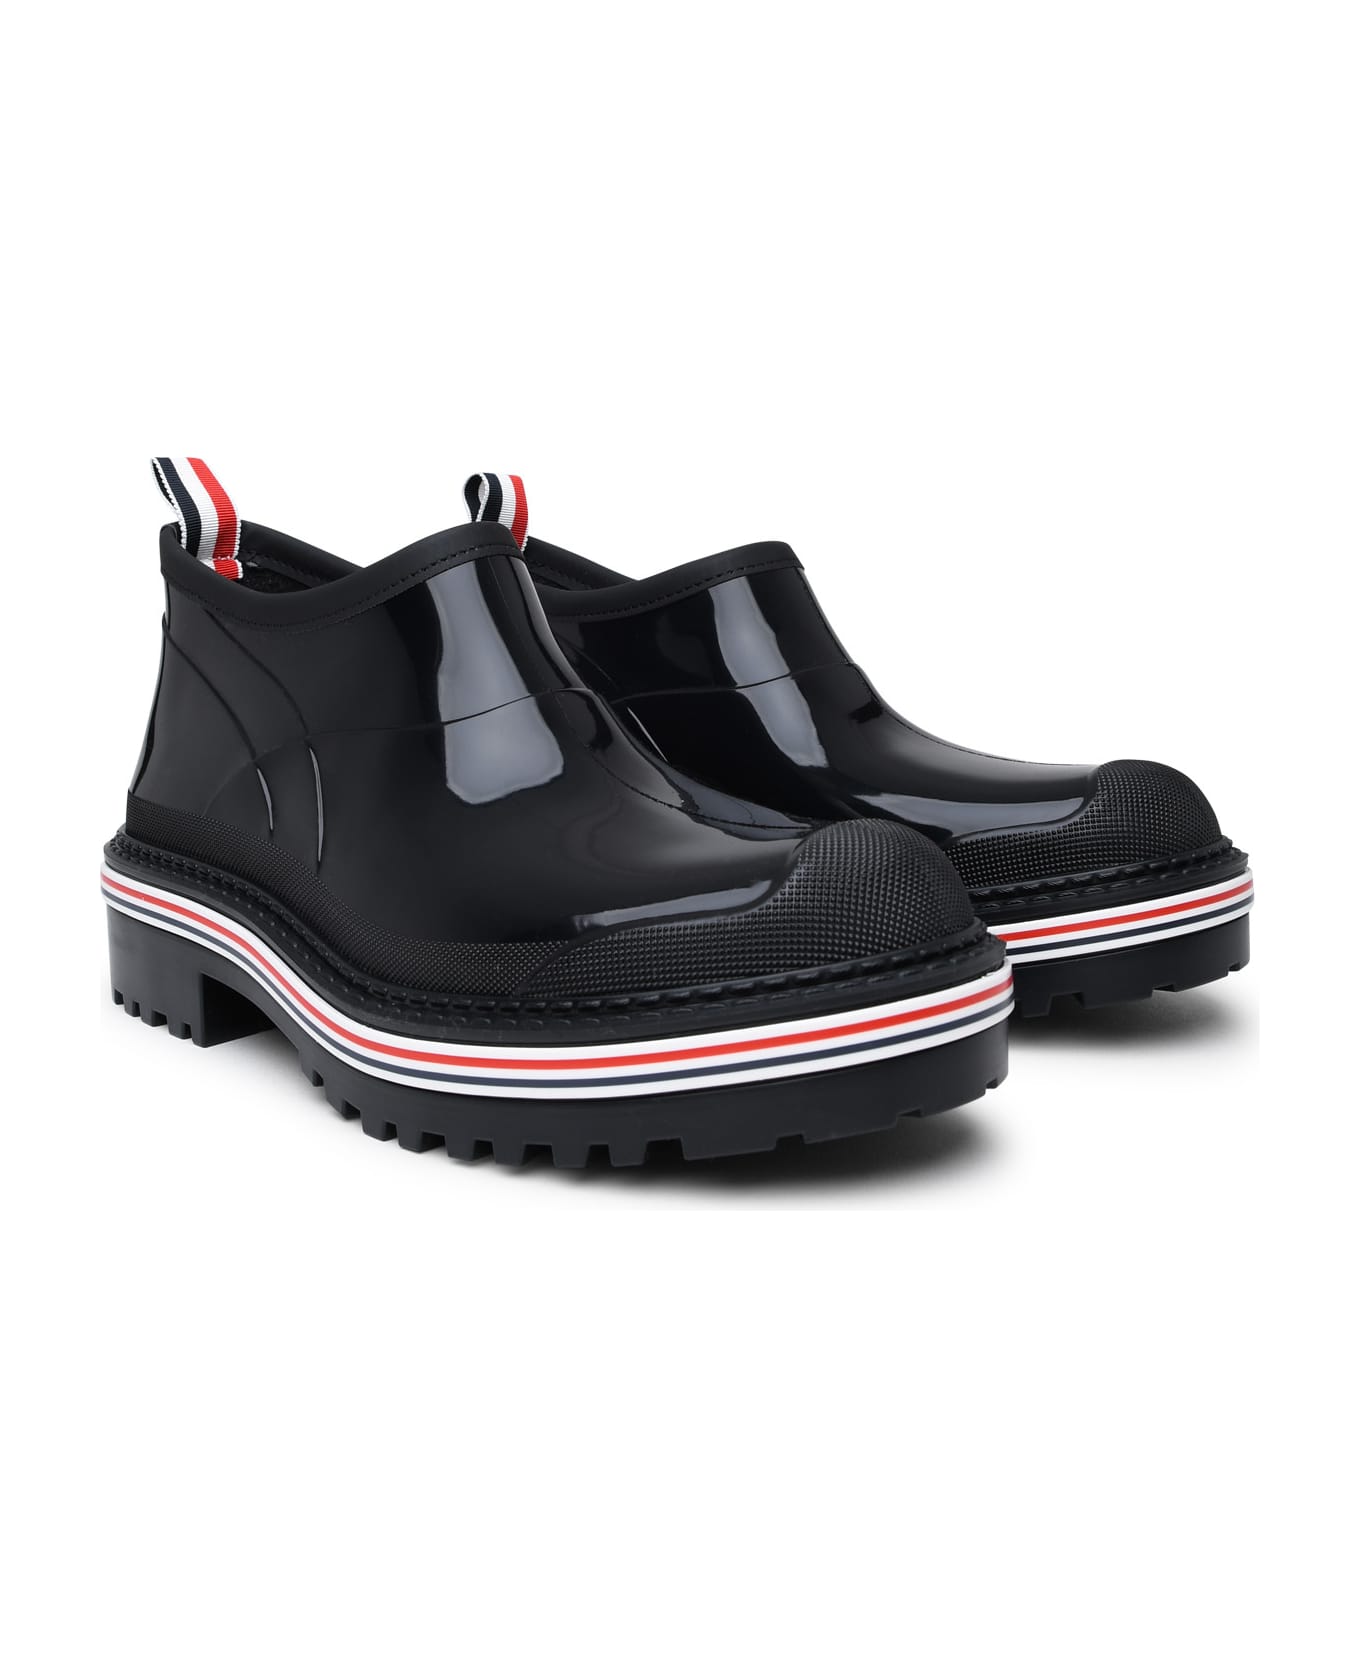 Thom Browne Black Rubber Garden Boots - black ブーツ